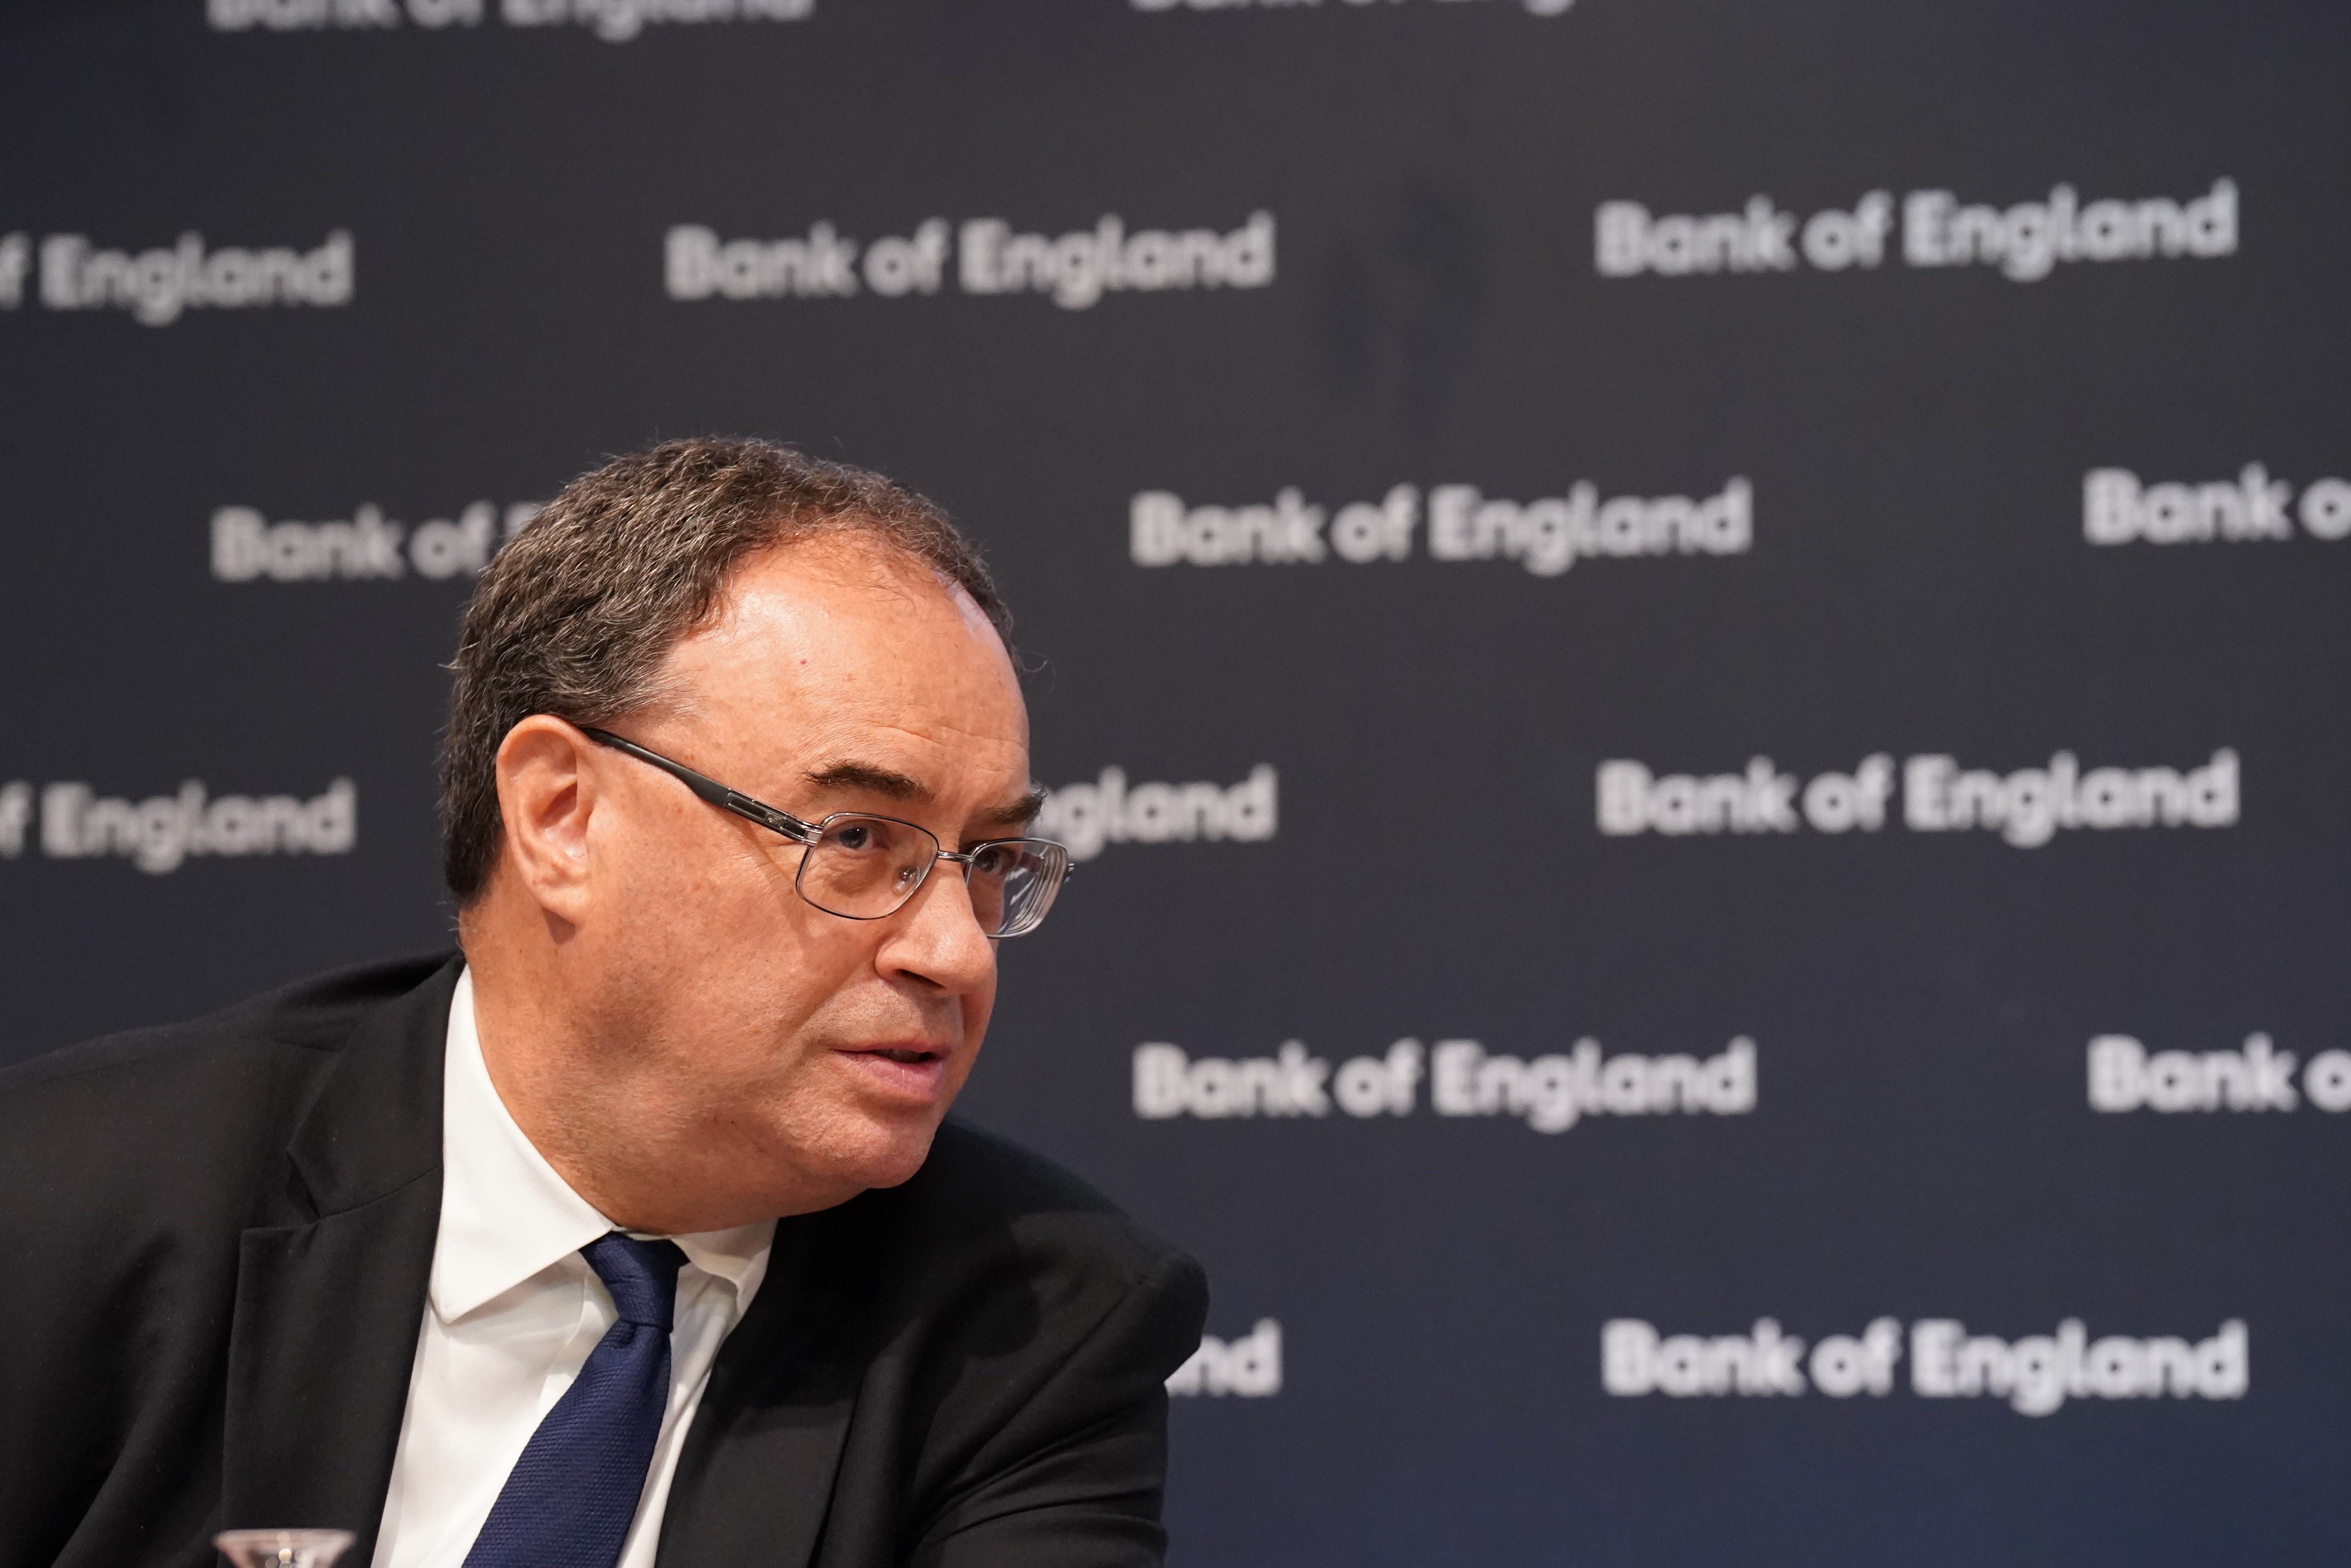 Bank of England governor Andrew Bailey